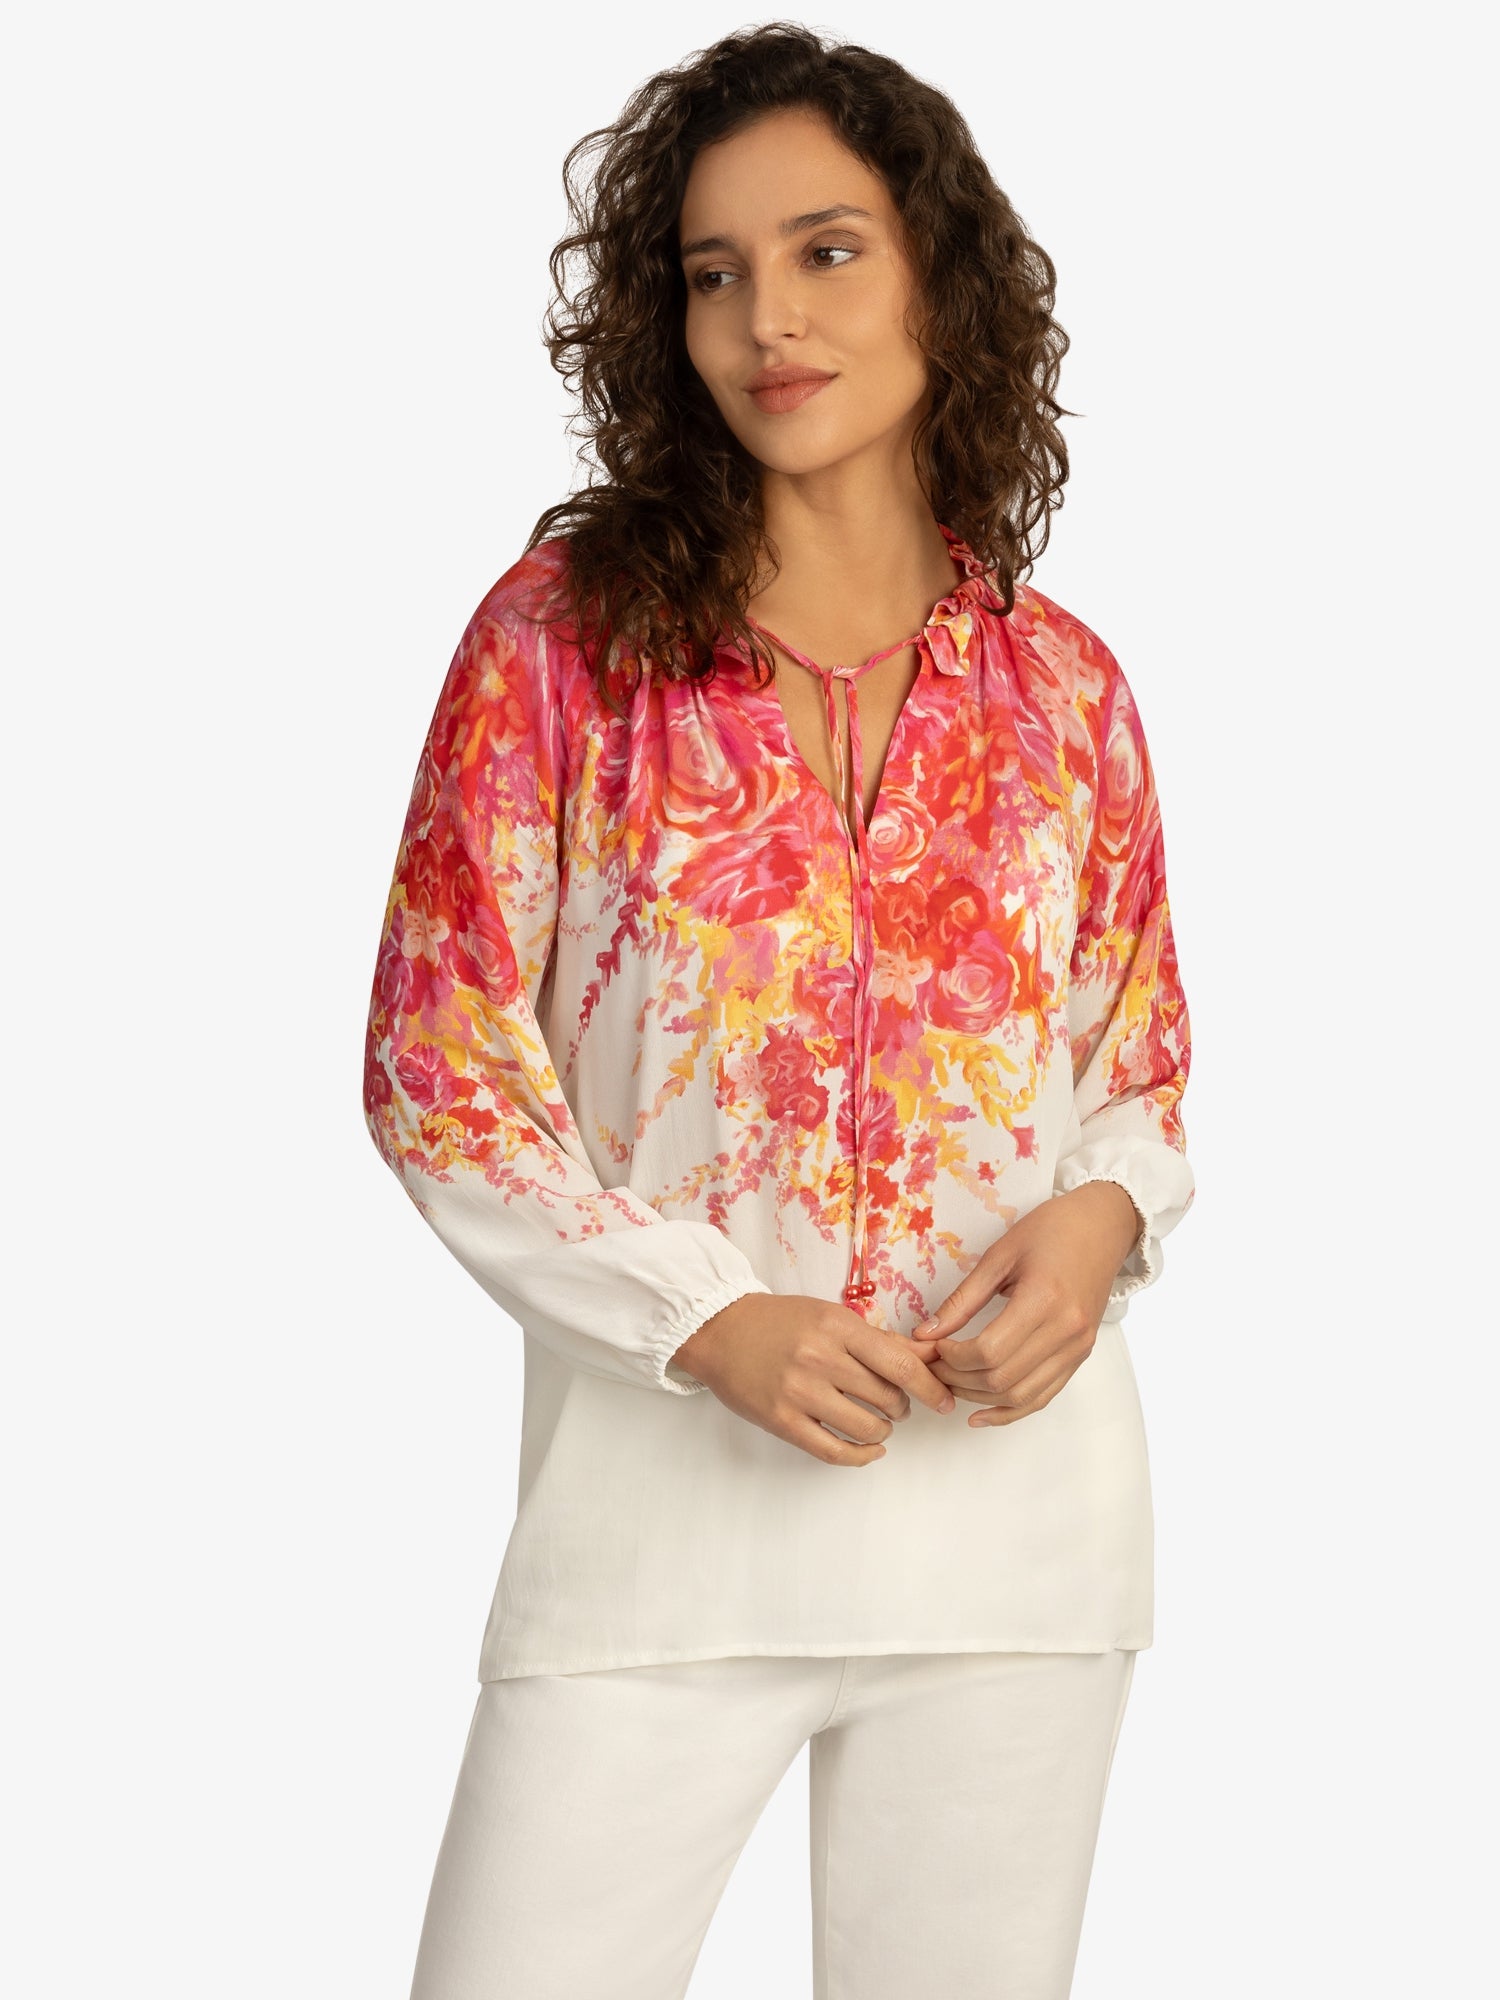 Mint & Mia Sommer Bluse aus hochwertigem Viskose Material mit Feminin Stil | weiß-multicolor